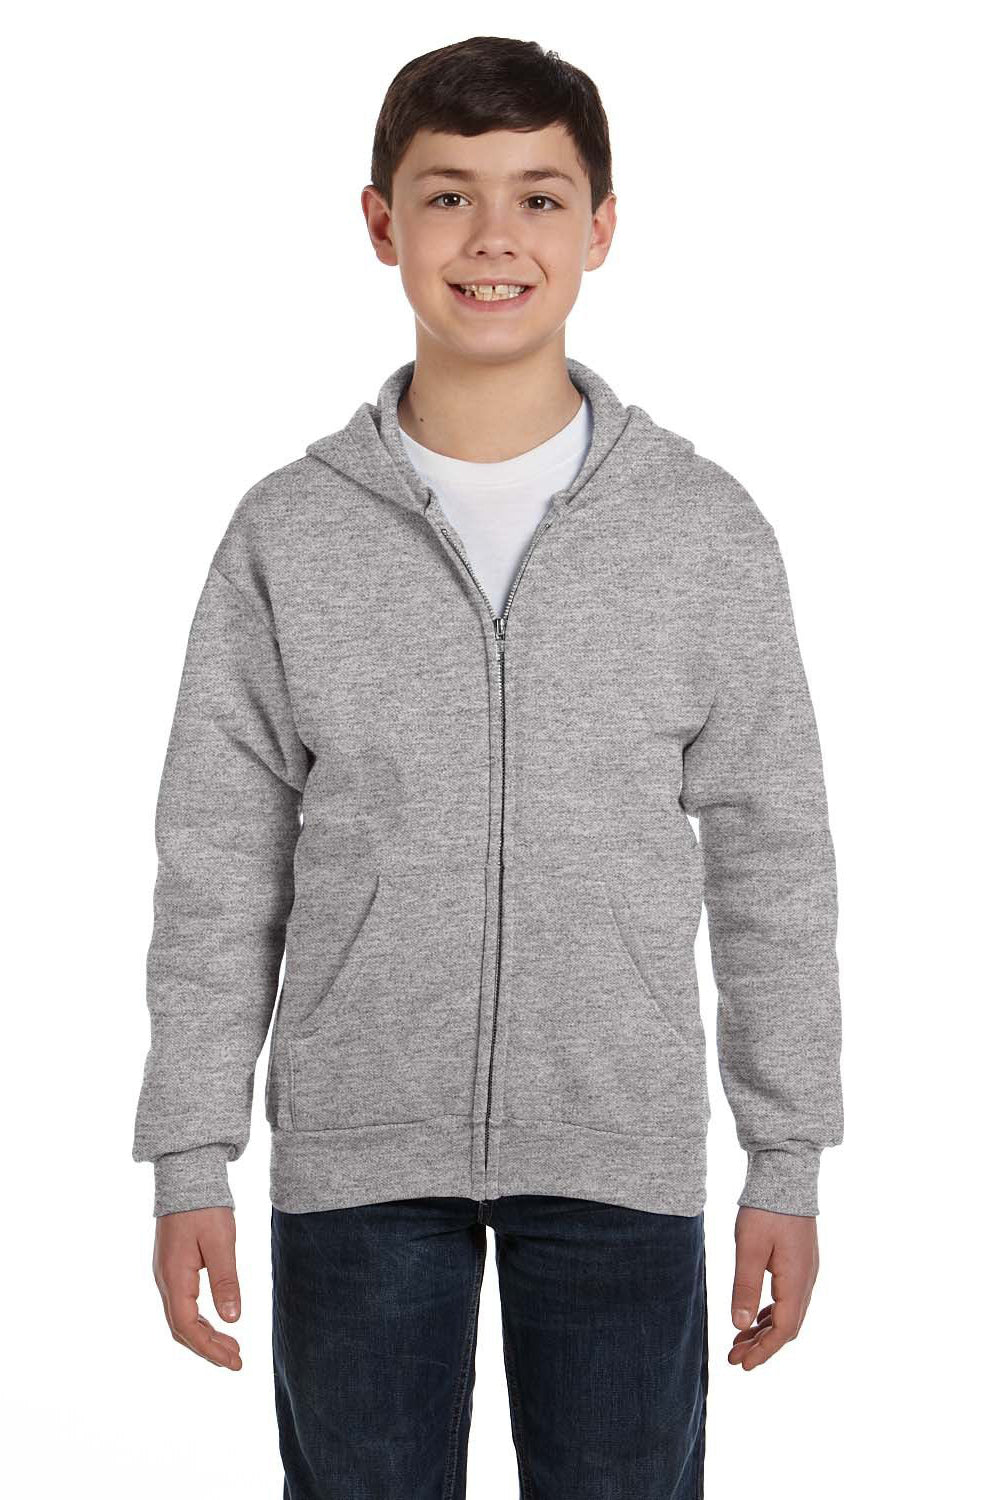 Hanes P480 Youth EcoSmart Print Pro XP Full Zip Hooded Sweatshirt Hoodie Light Steel Grey Front